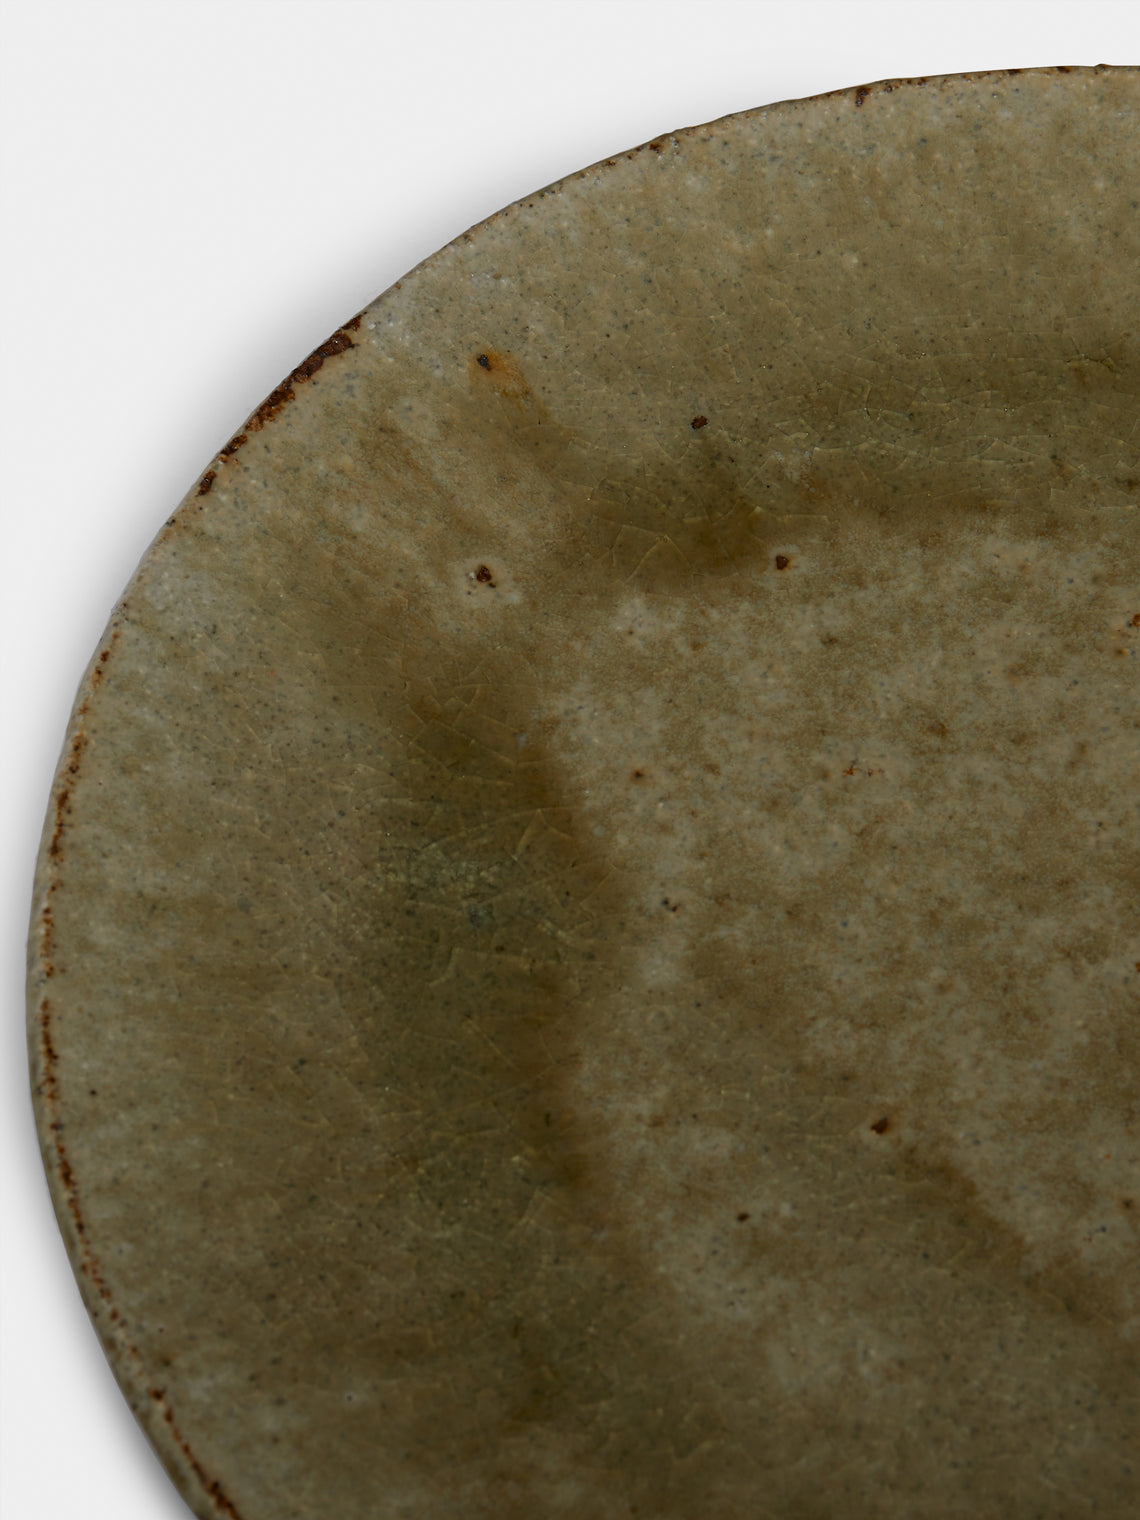 Ingot Objects - Ash-Glazed Ceramic Rimless Side Plate - Beige - ABASK